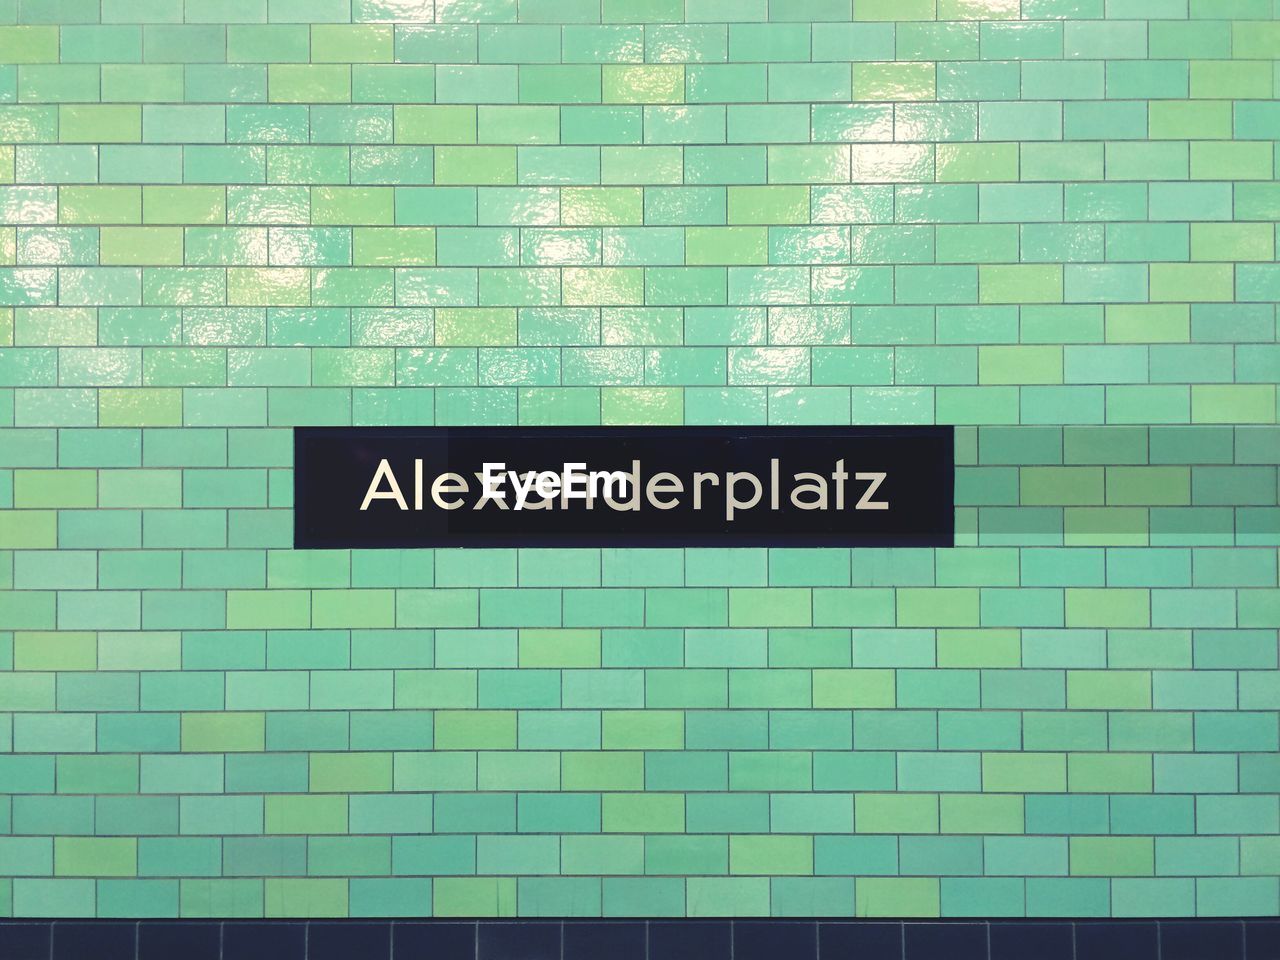 Alexanderplatz sign on wall at subway